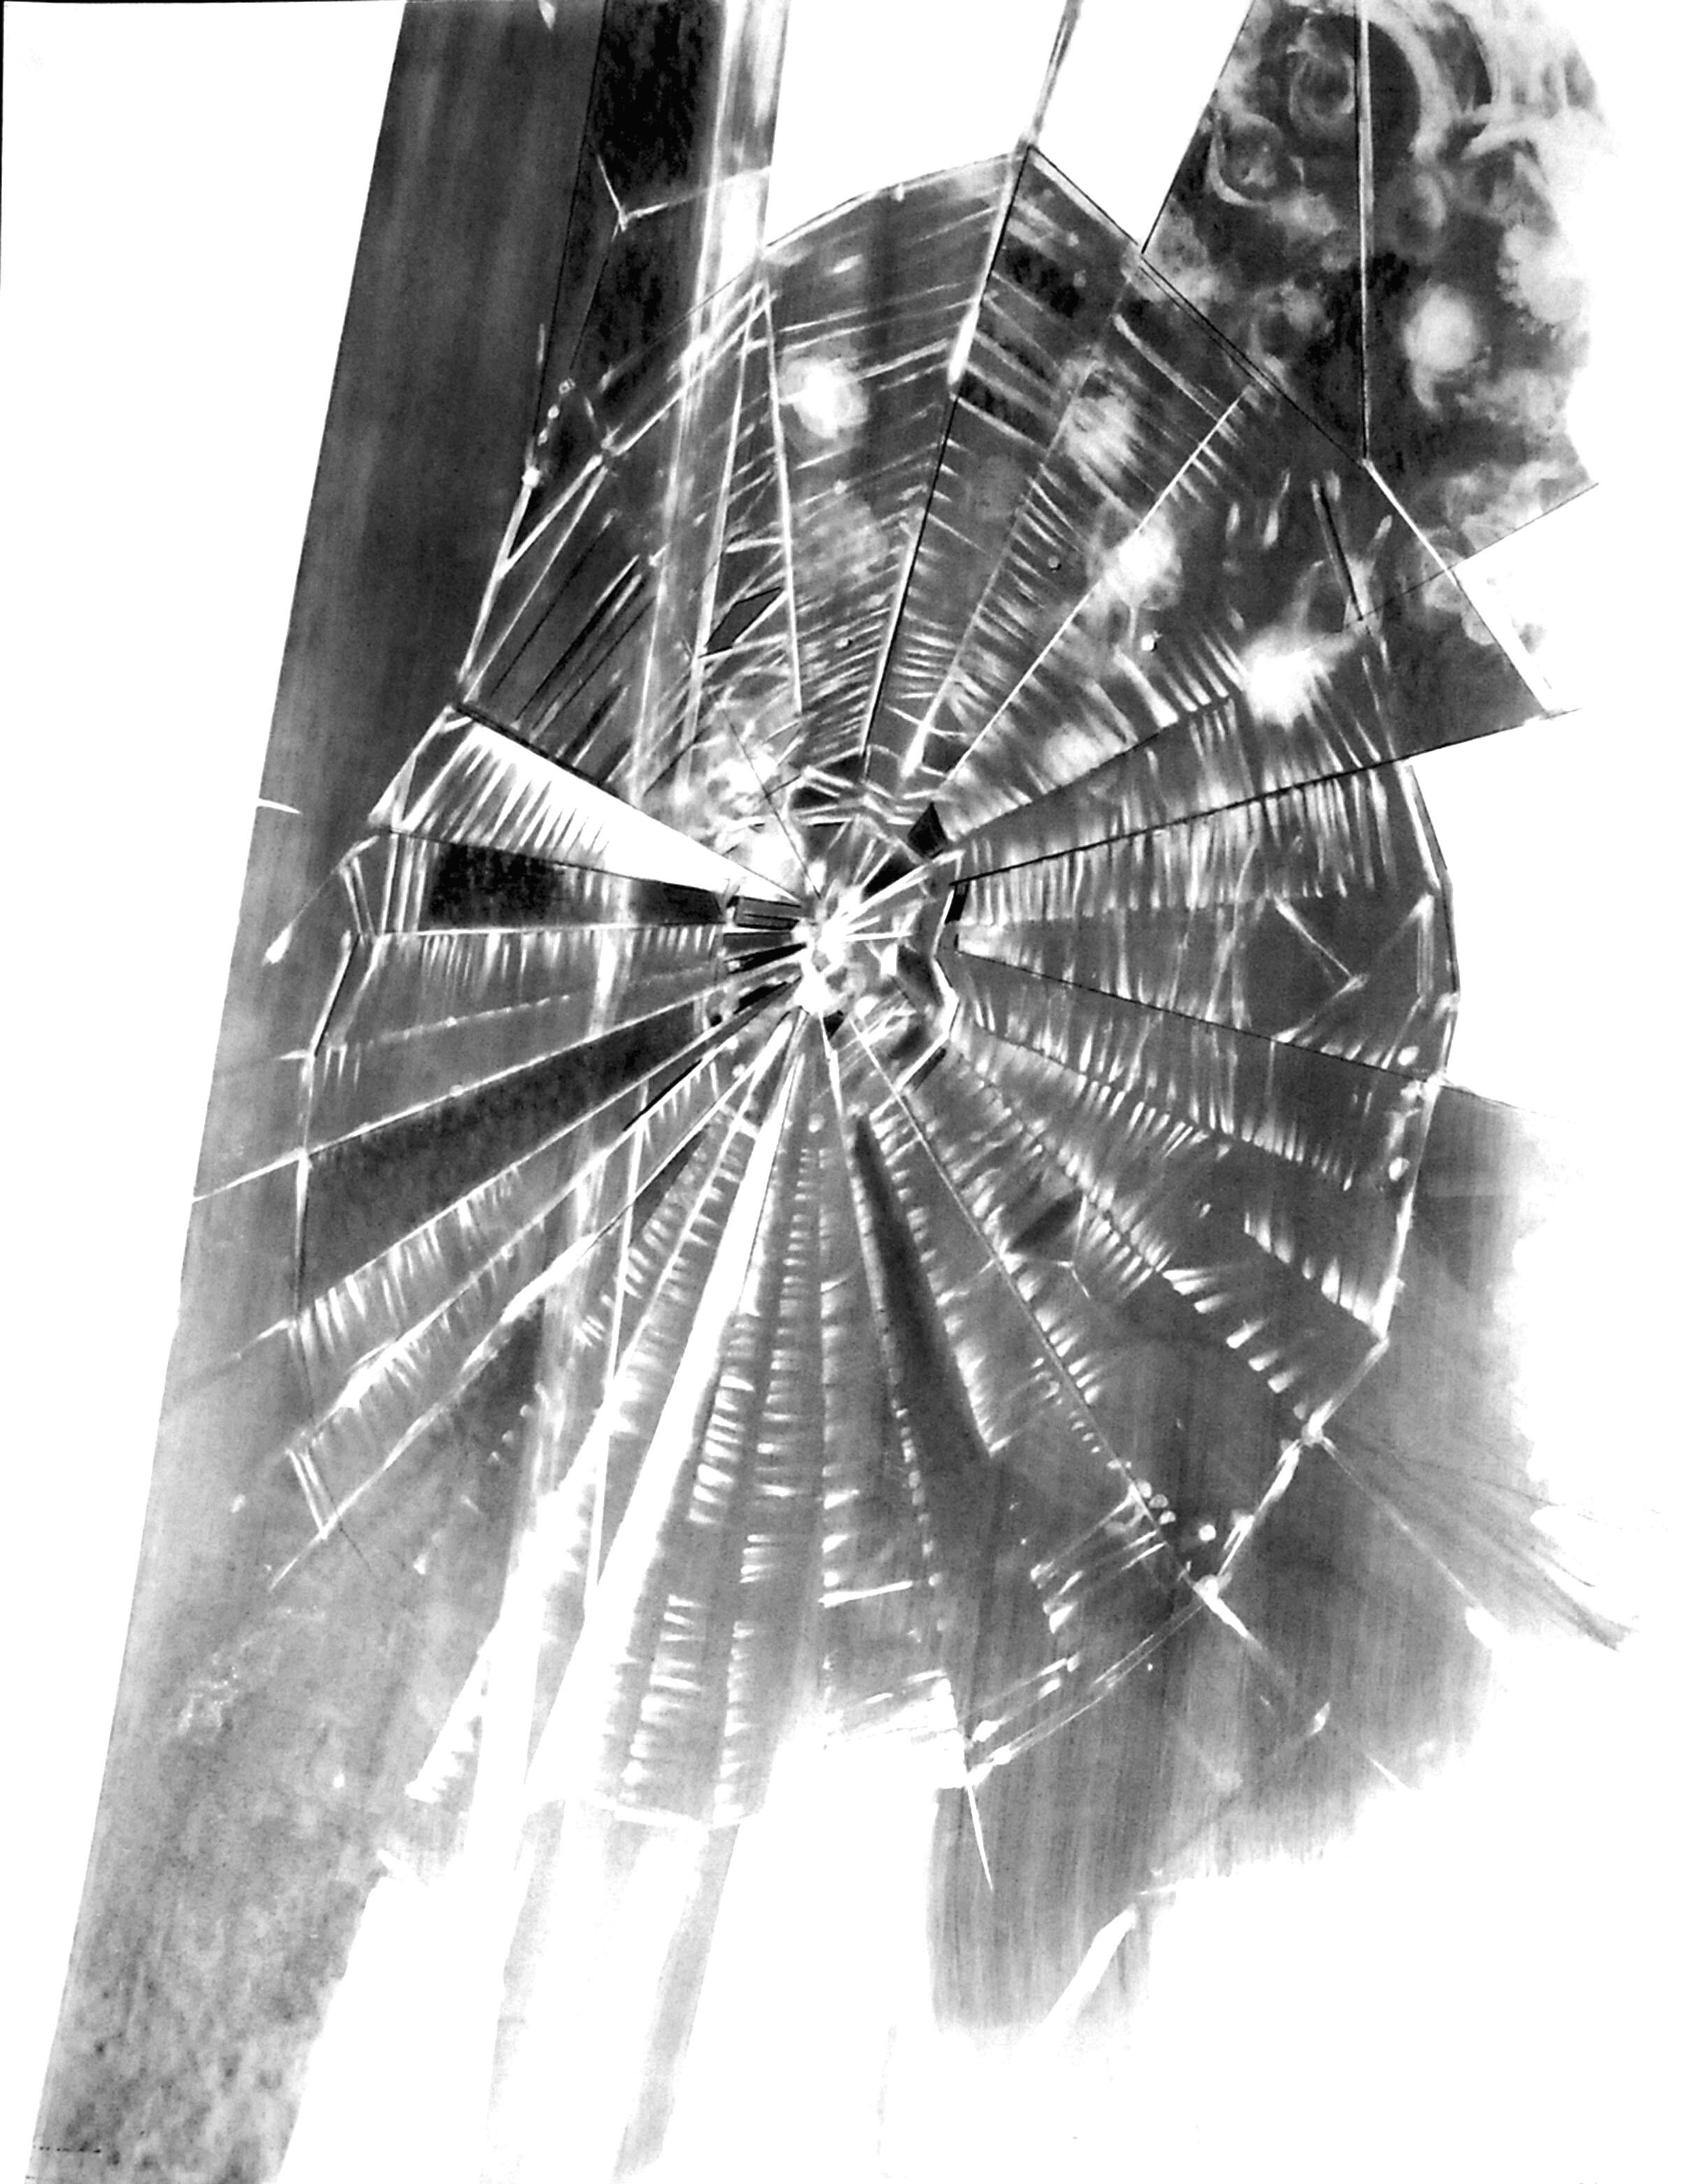   Spider Web   graphite on rives  23” x 29”  2007  